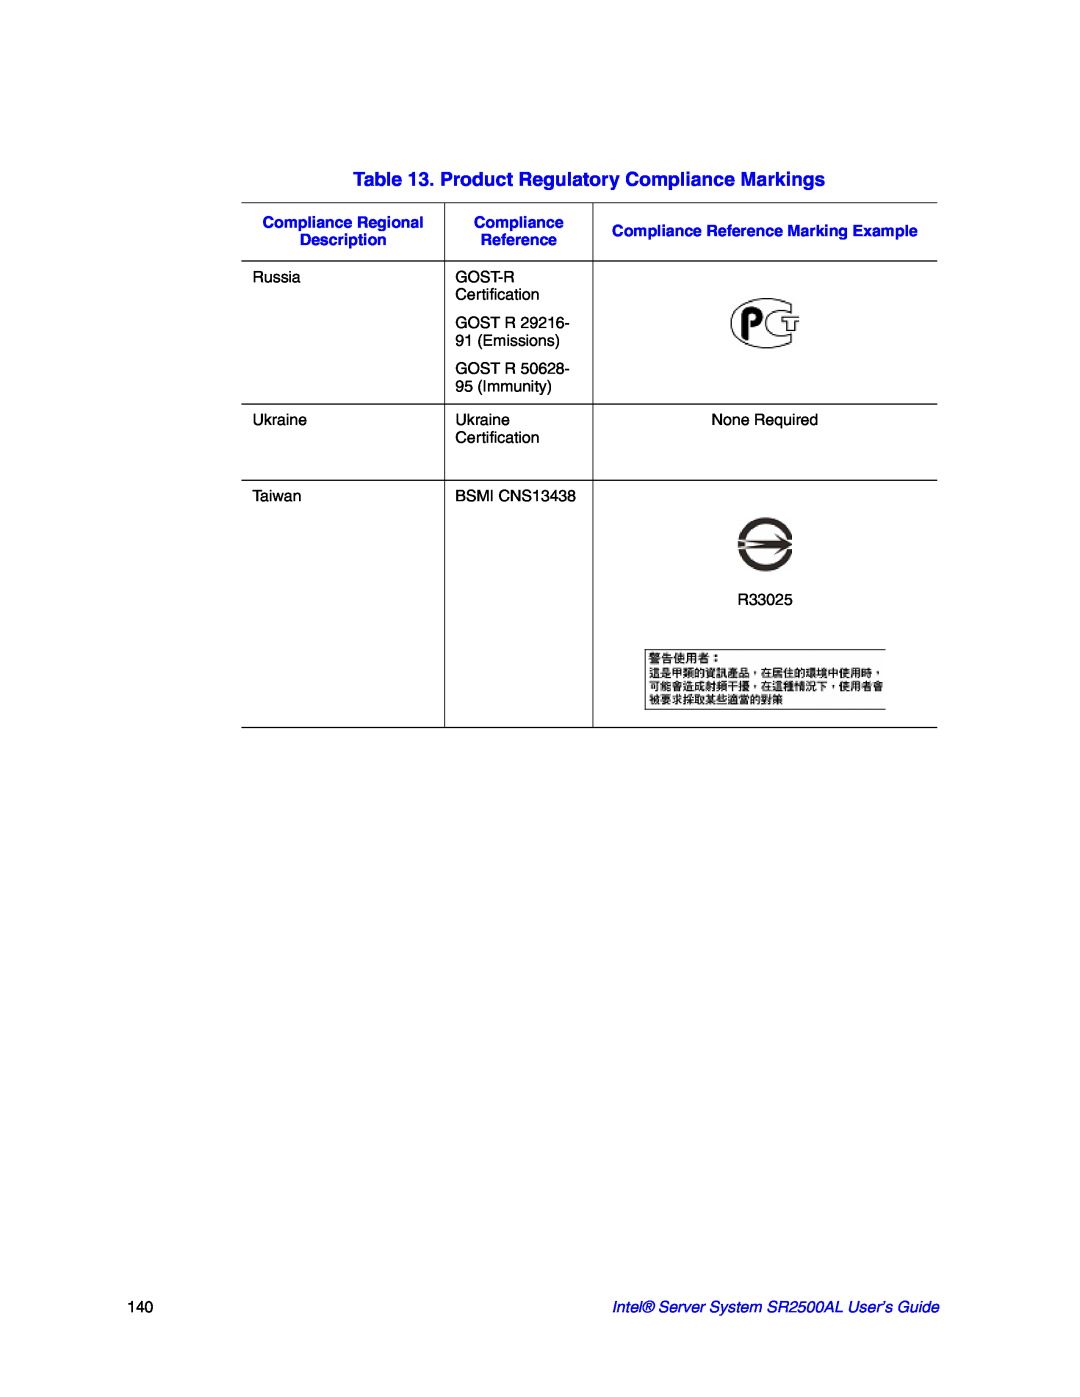 Intel SR2500AL manual Product Regulatory Compliance Markings, Compliance Regional, Compliance Reference Marking Example 